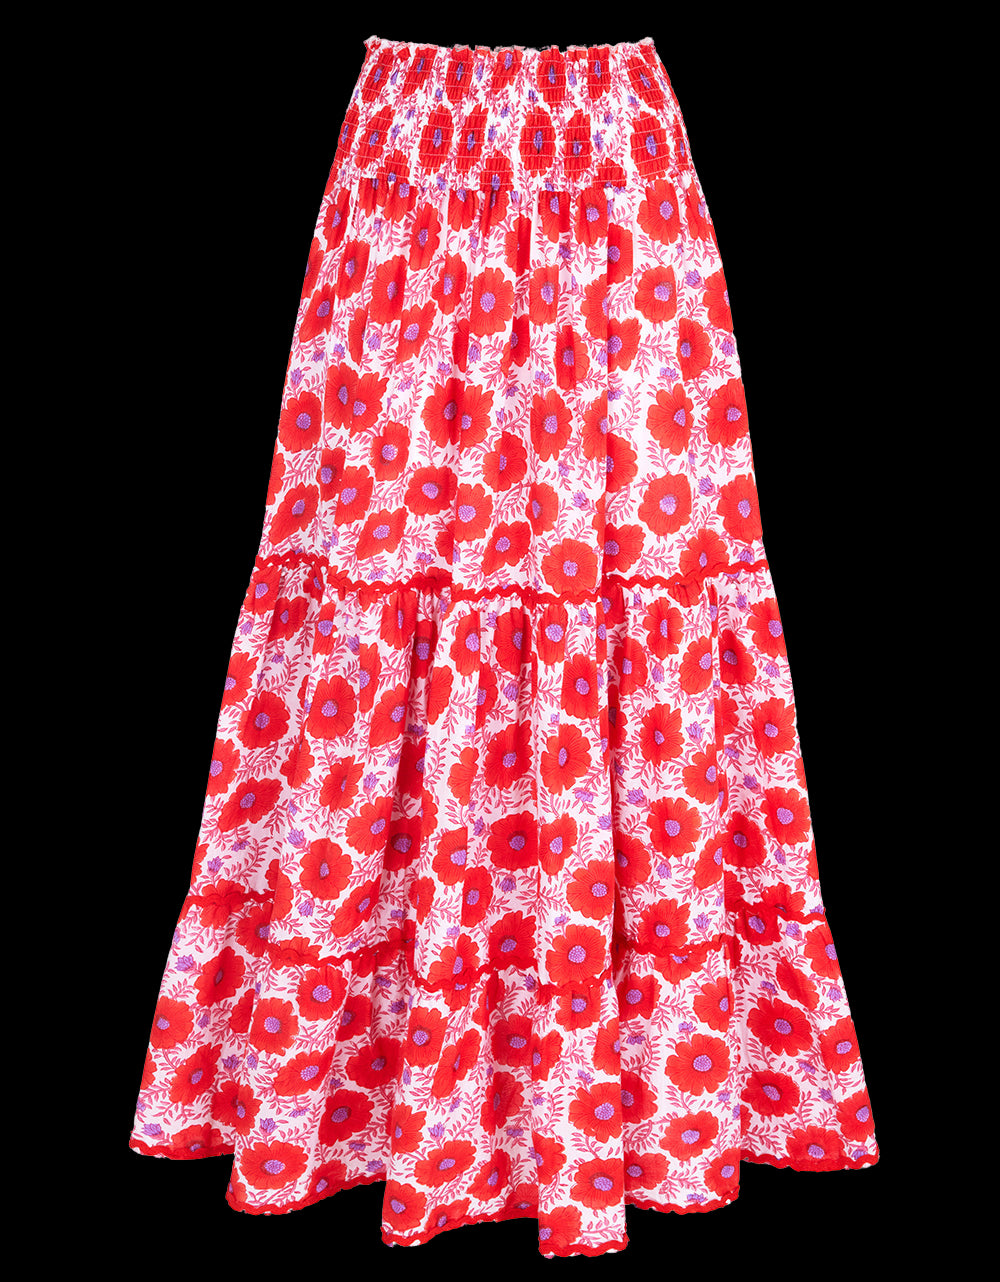 Geranium Poppy Lottie Skirt